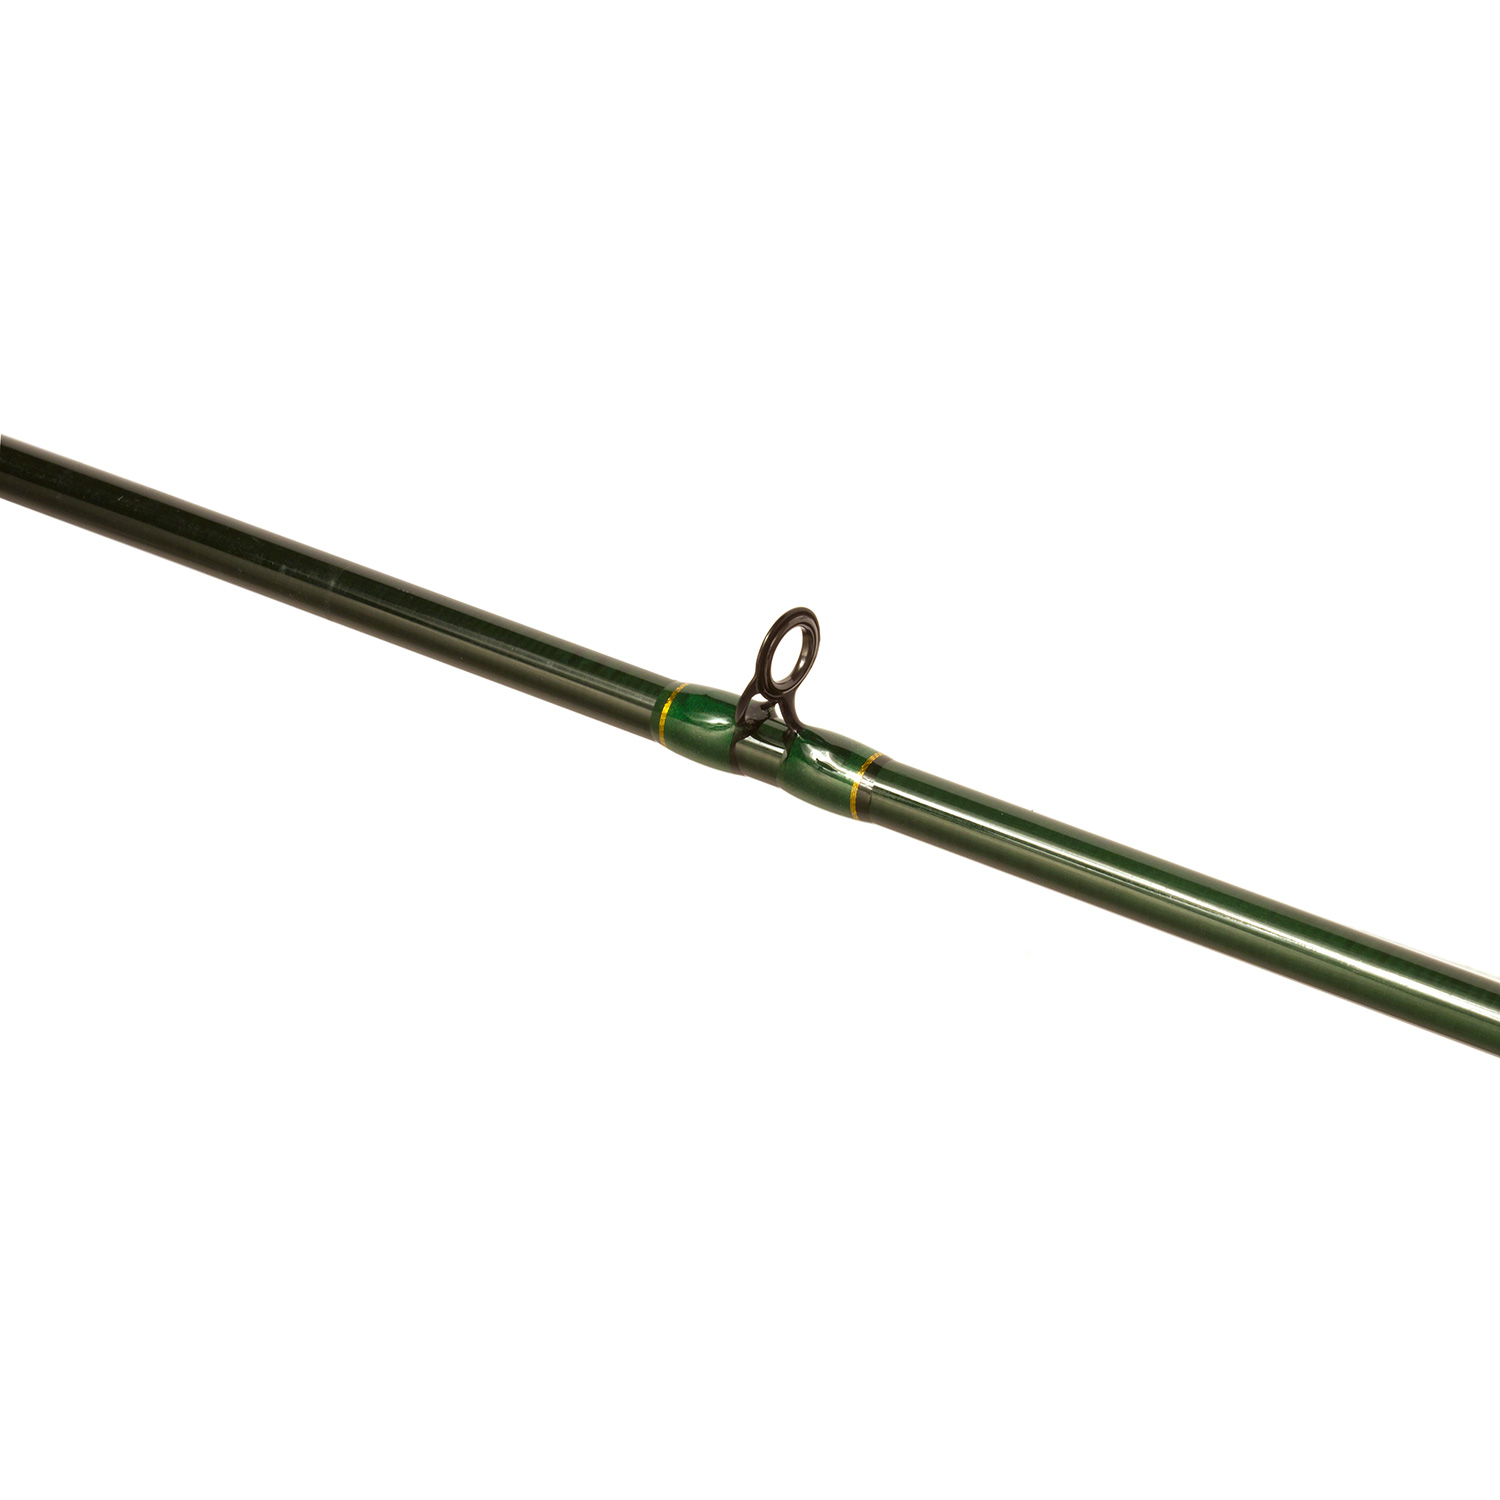 7'6 Flippin' Stick IM7 Series Telescoping Baitcasting Rod, Medium Power